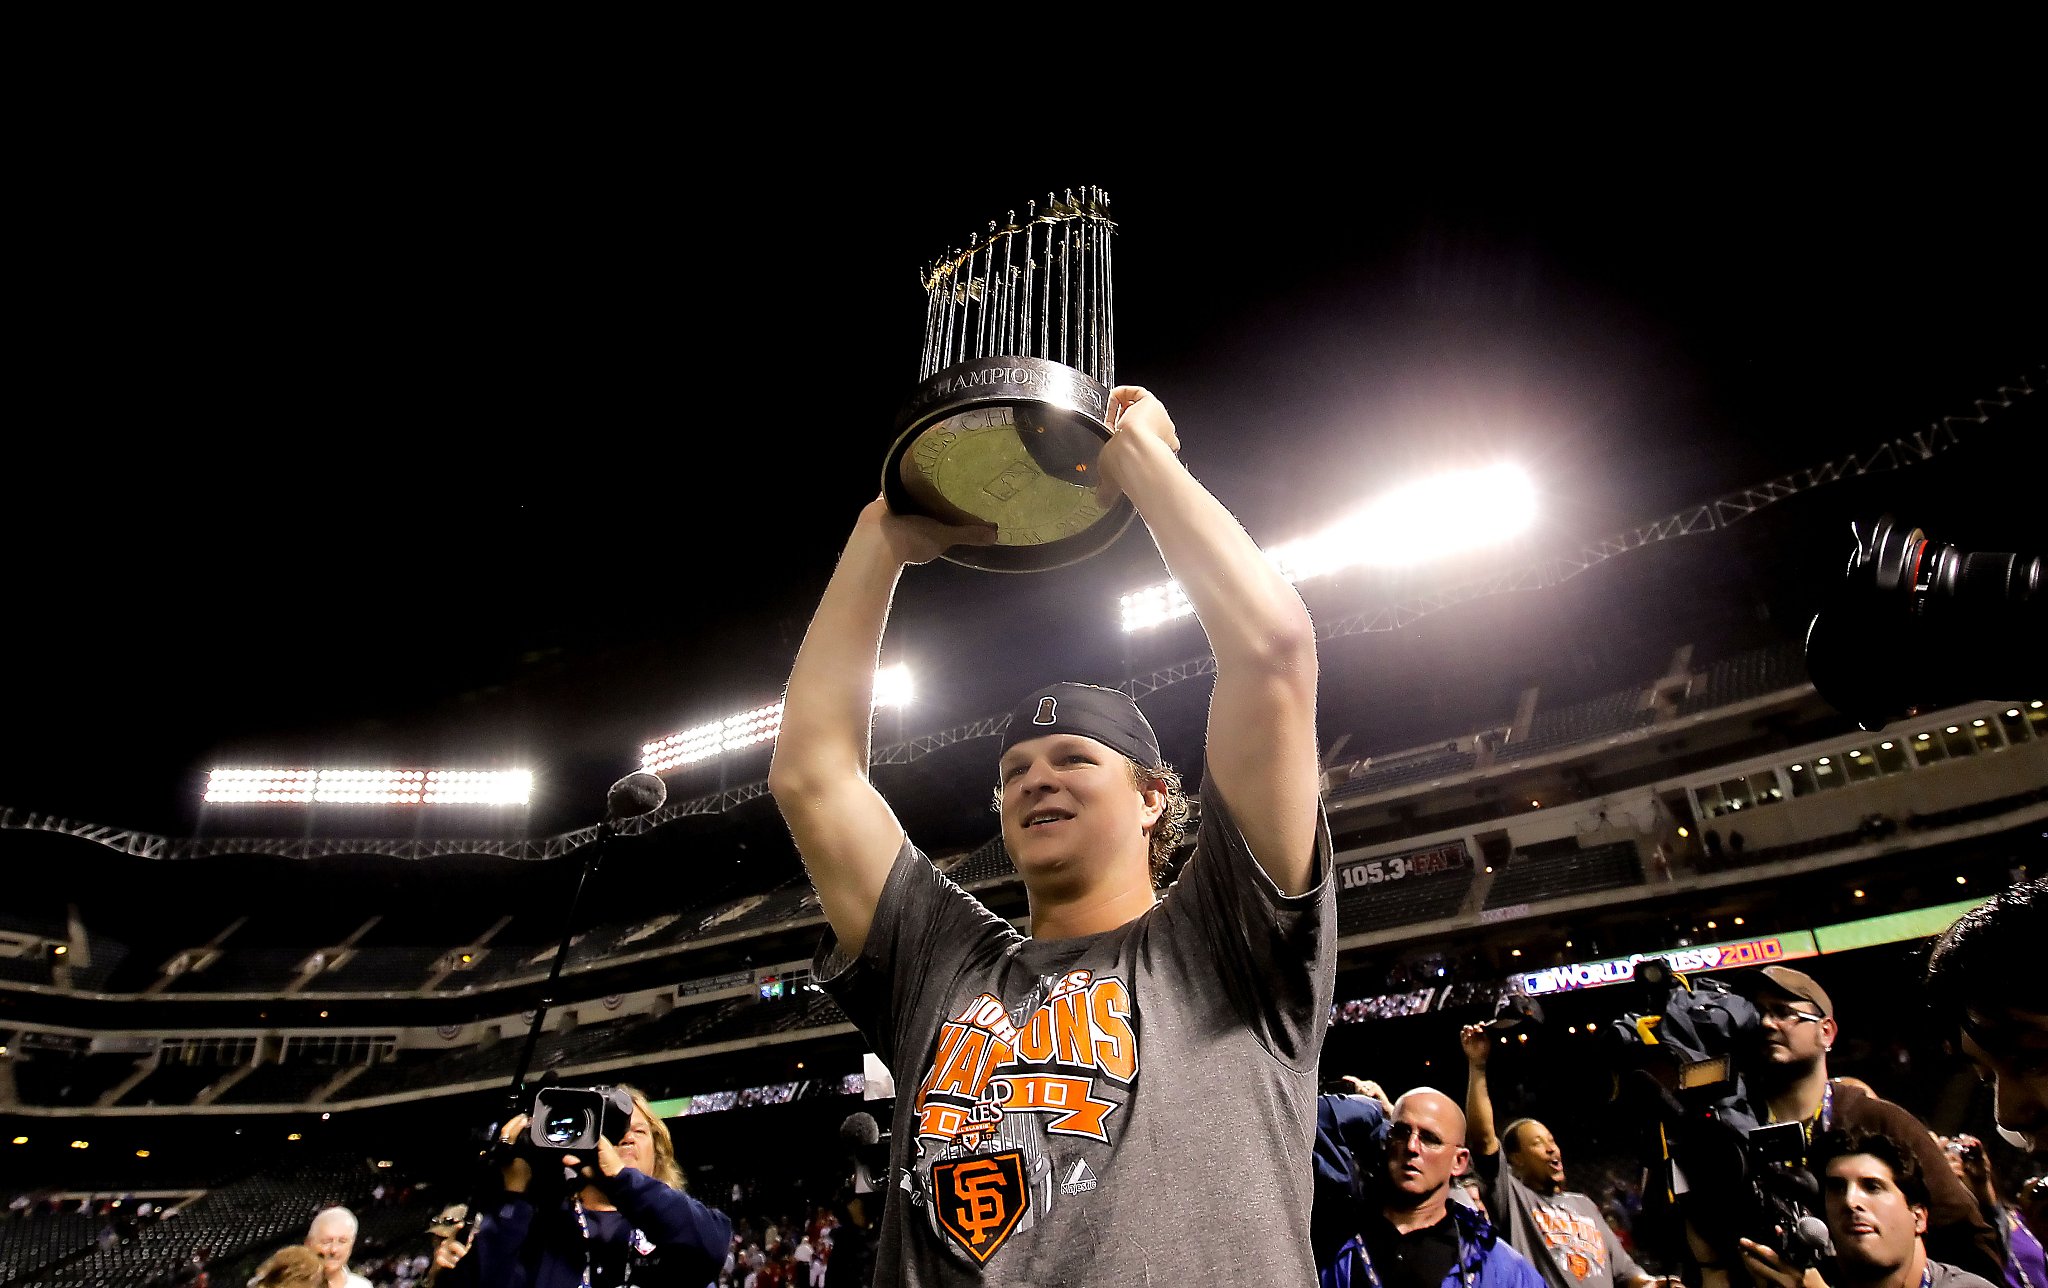 Giants Splash: 10 reflections on SF's 2010 World Series championship run